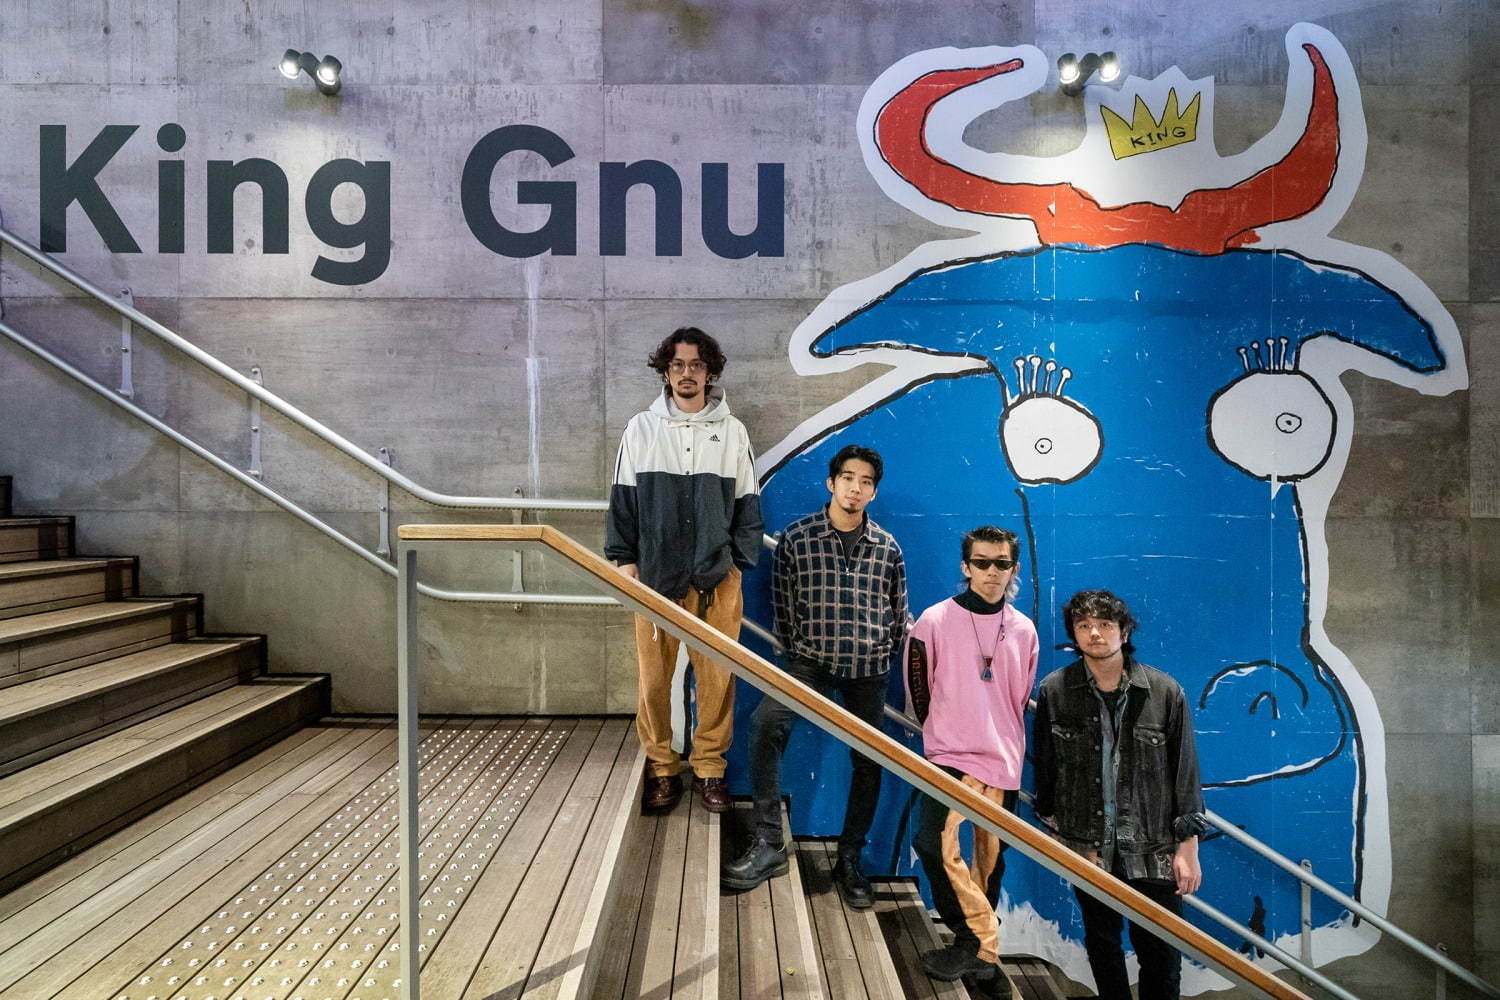 King Gnu ミレニアムパレードの展覧会 ヌーミレパーク 仮 銀座で 3d映像 ゲーム展示 ファッションプレス